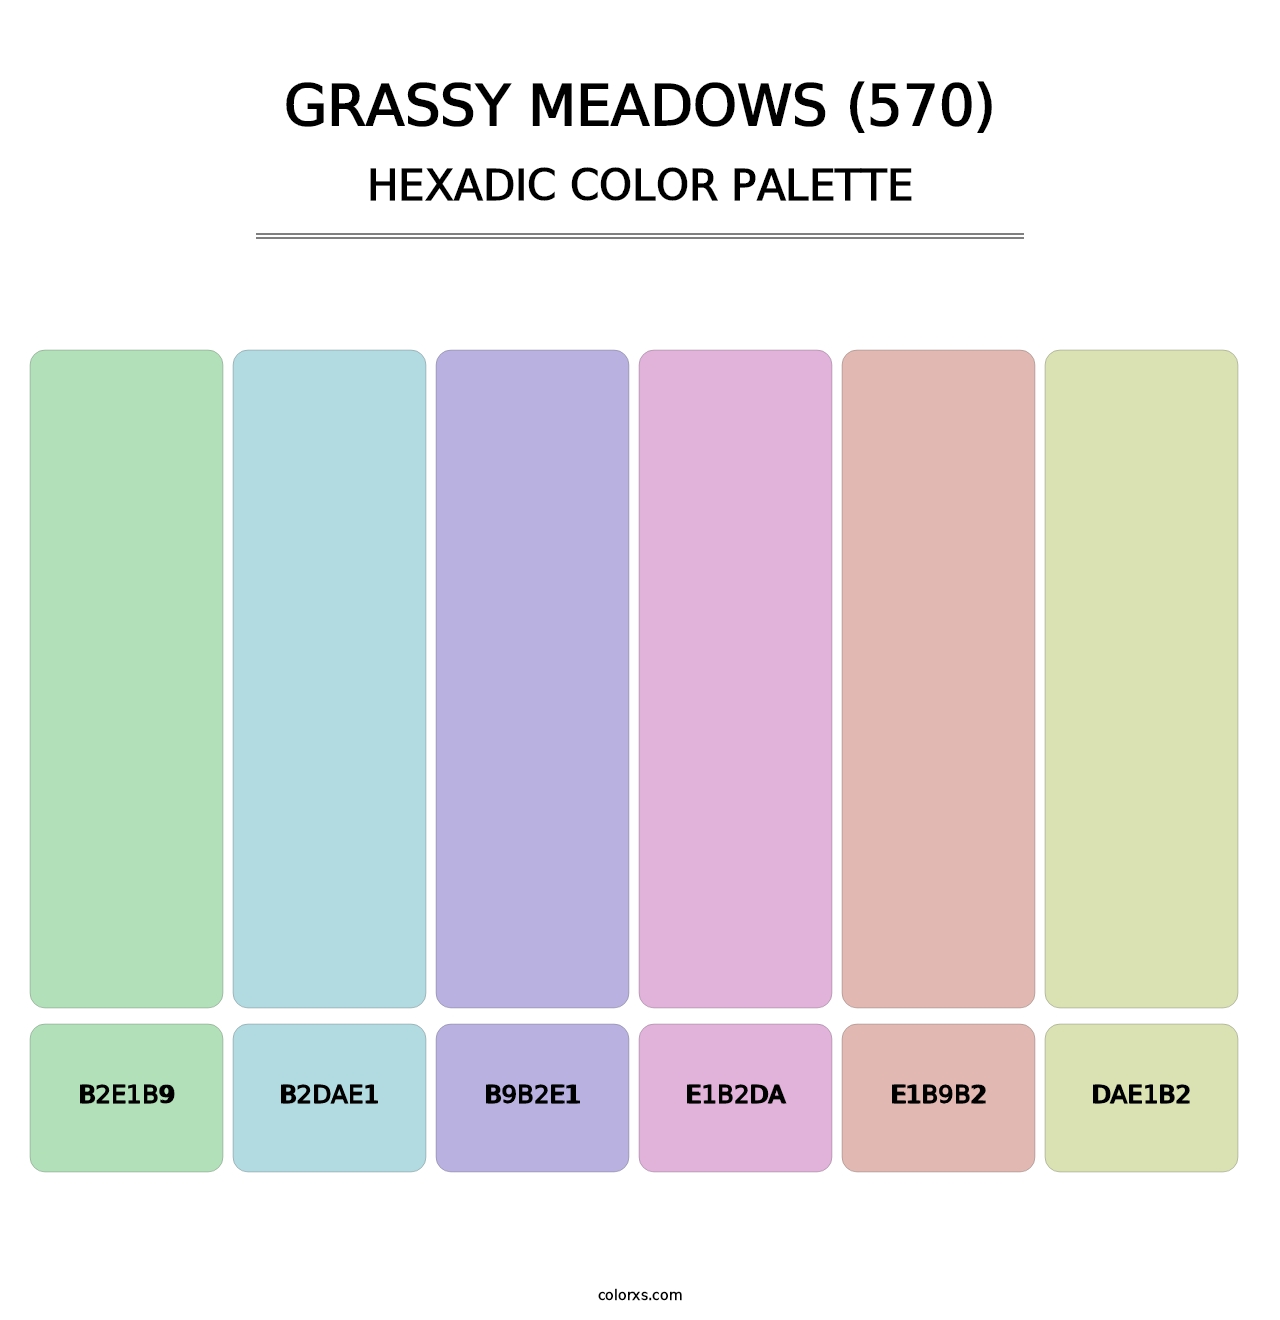 Grassy Meadows (570) - Hexadic Color Palette